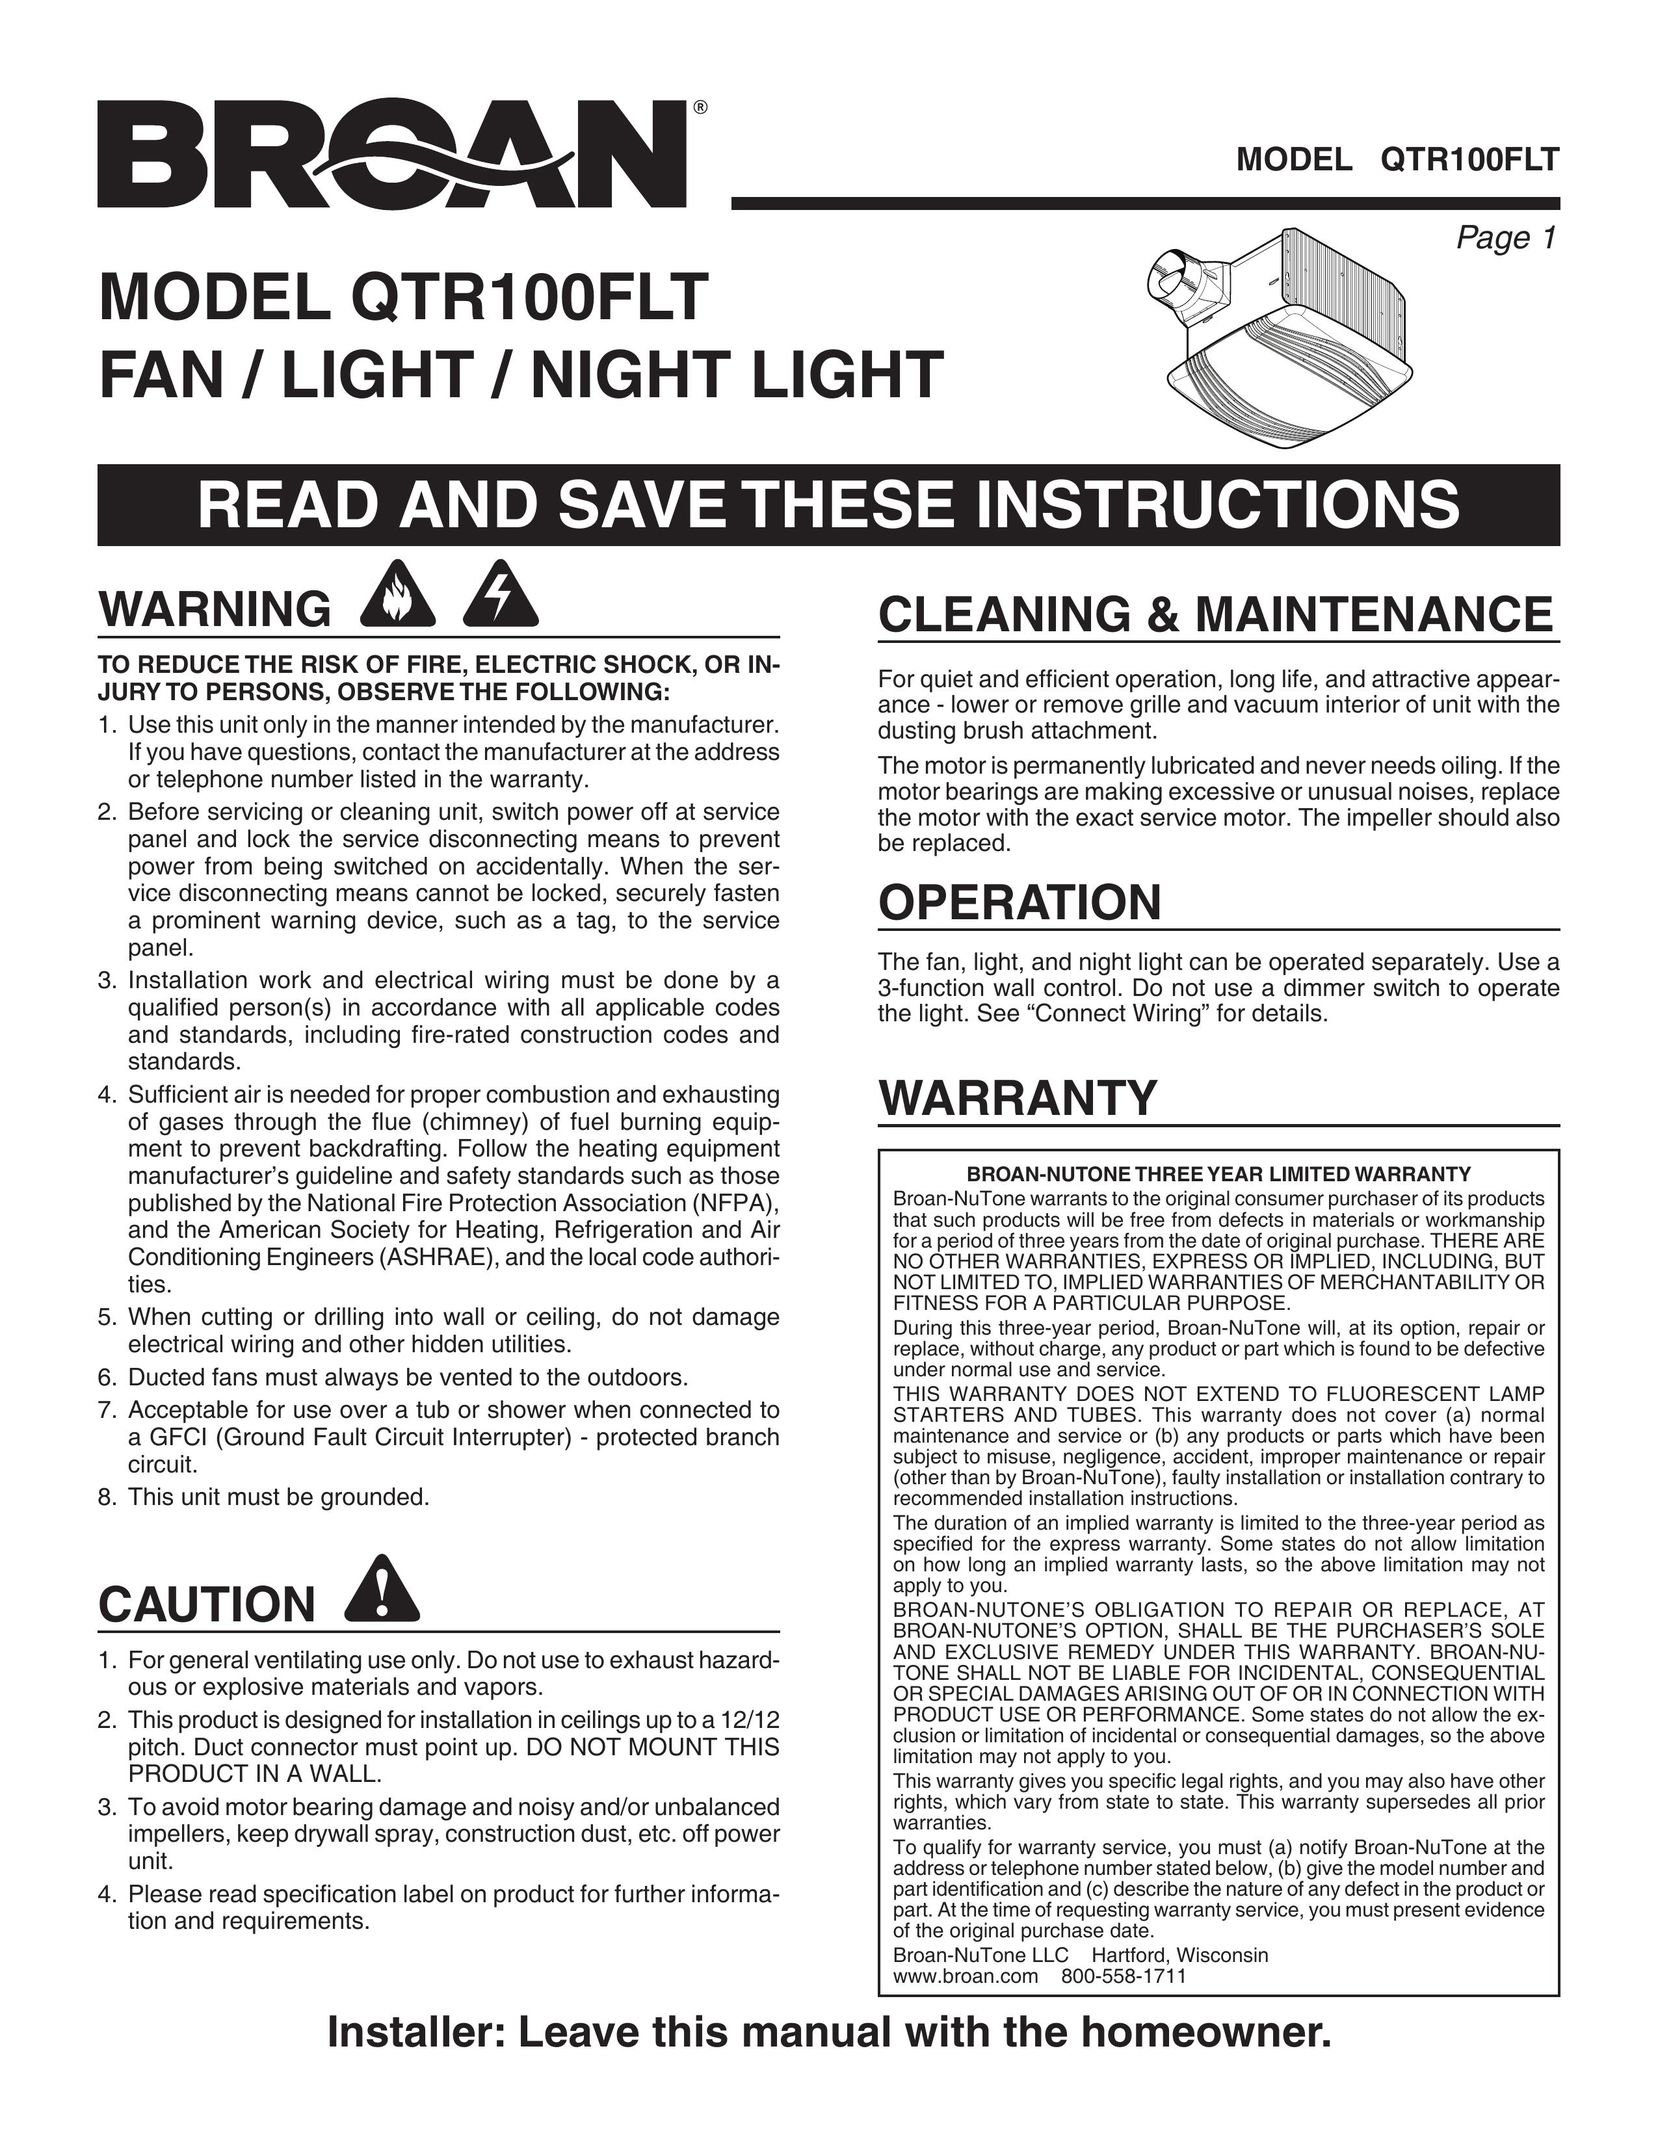 Broan QTR100FLT Indoor Furnishings User Manual